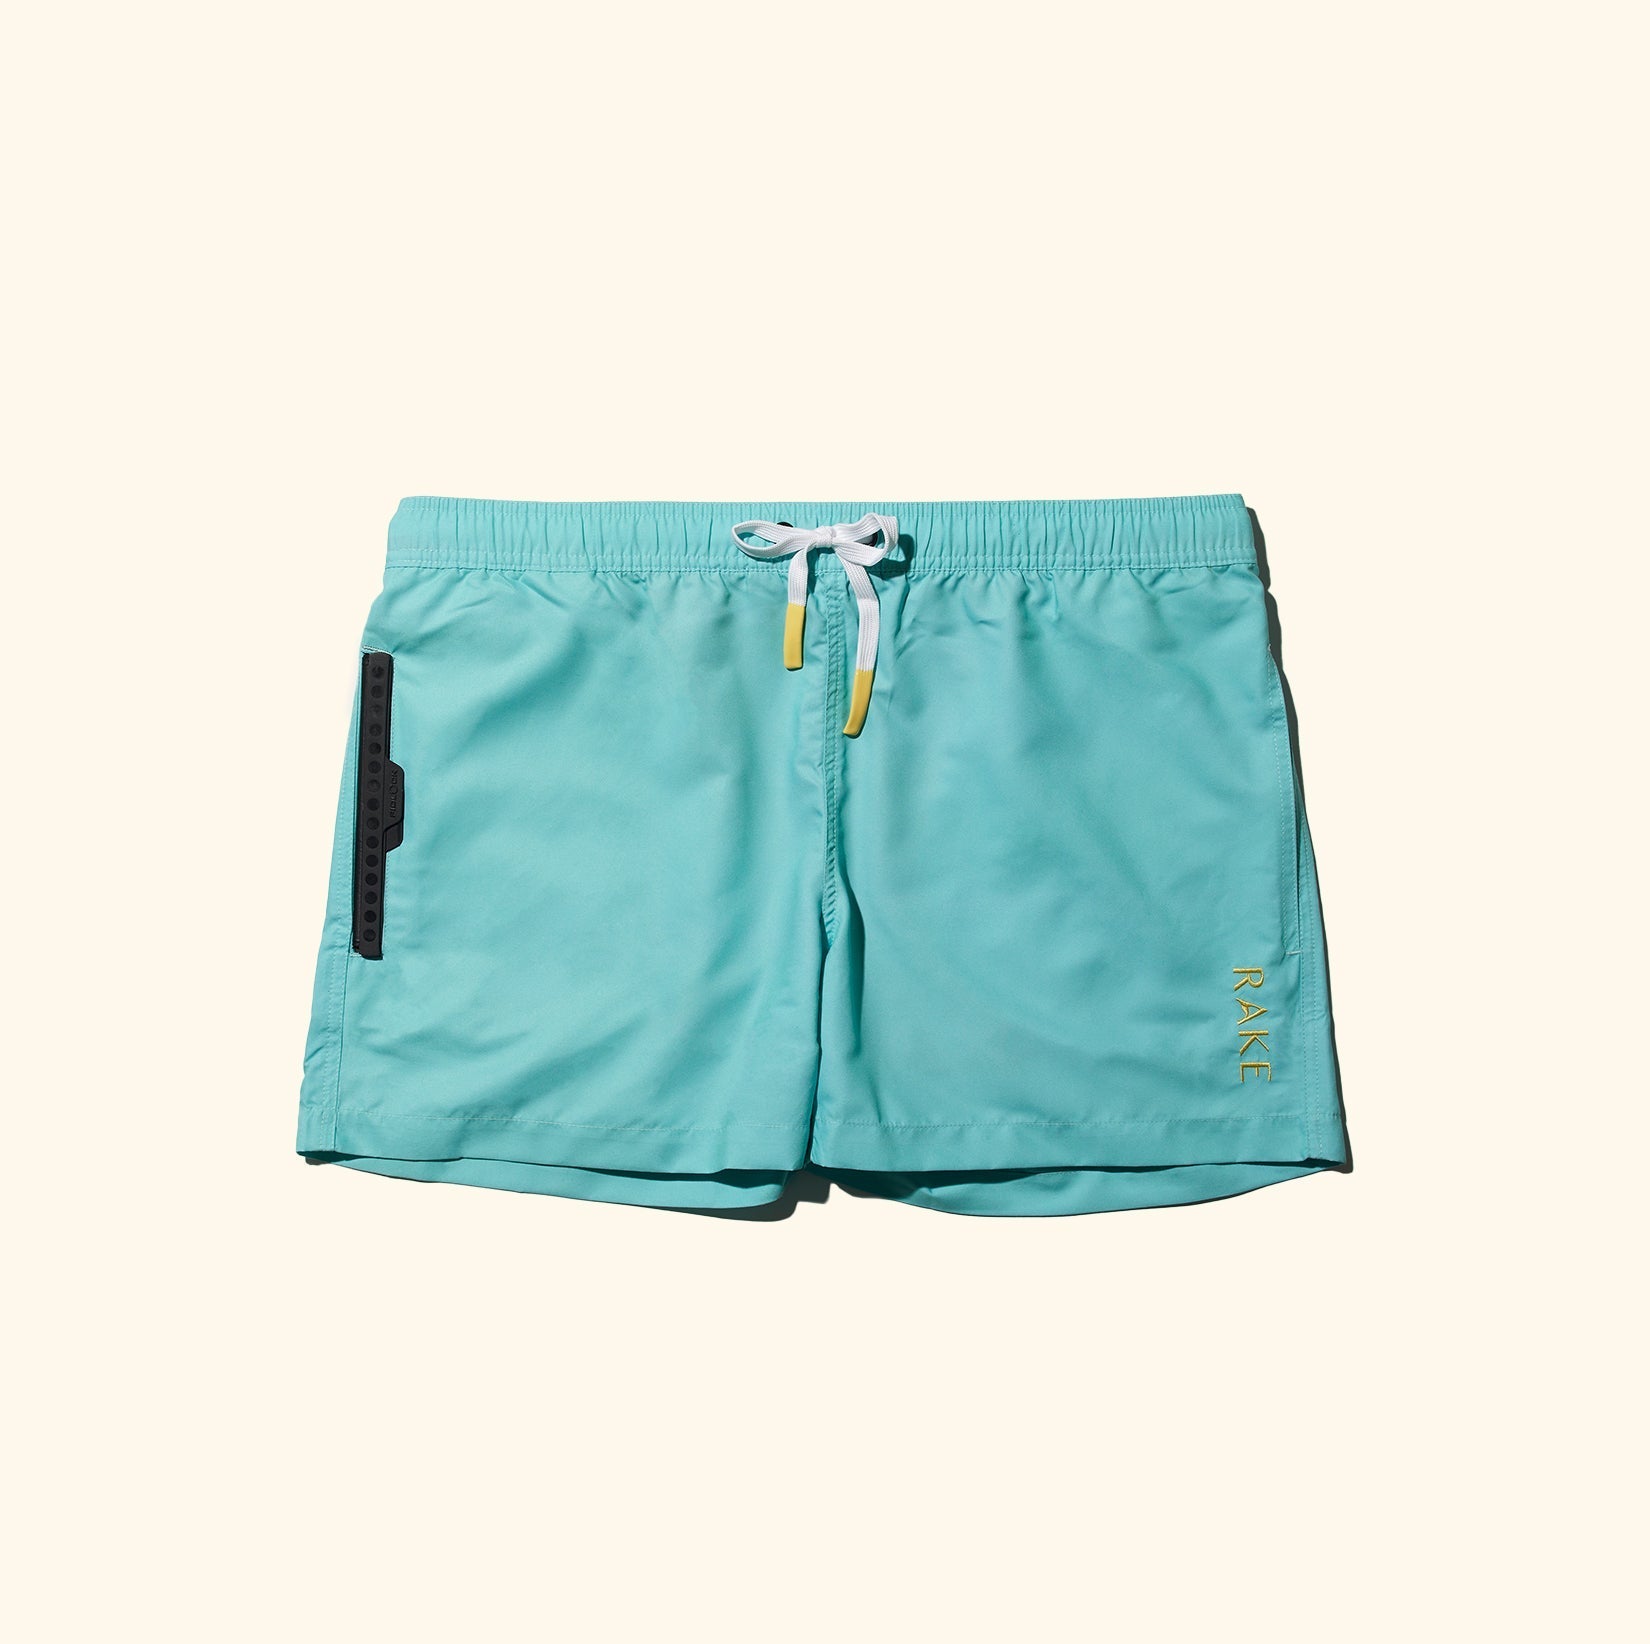 Waterproof swimming shorts -color mint - Image front flat lay - by RAKE - Size xs till xxl - by RAKE XS